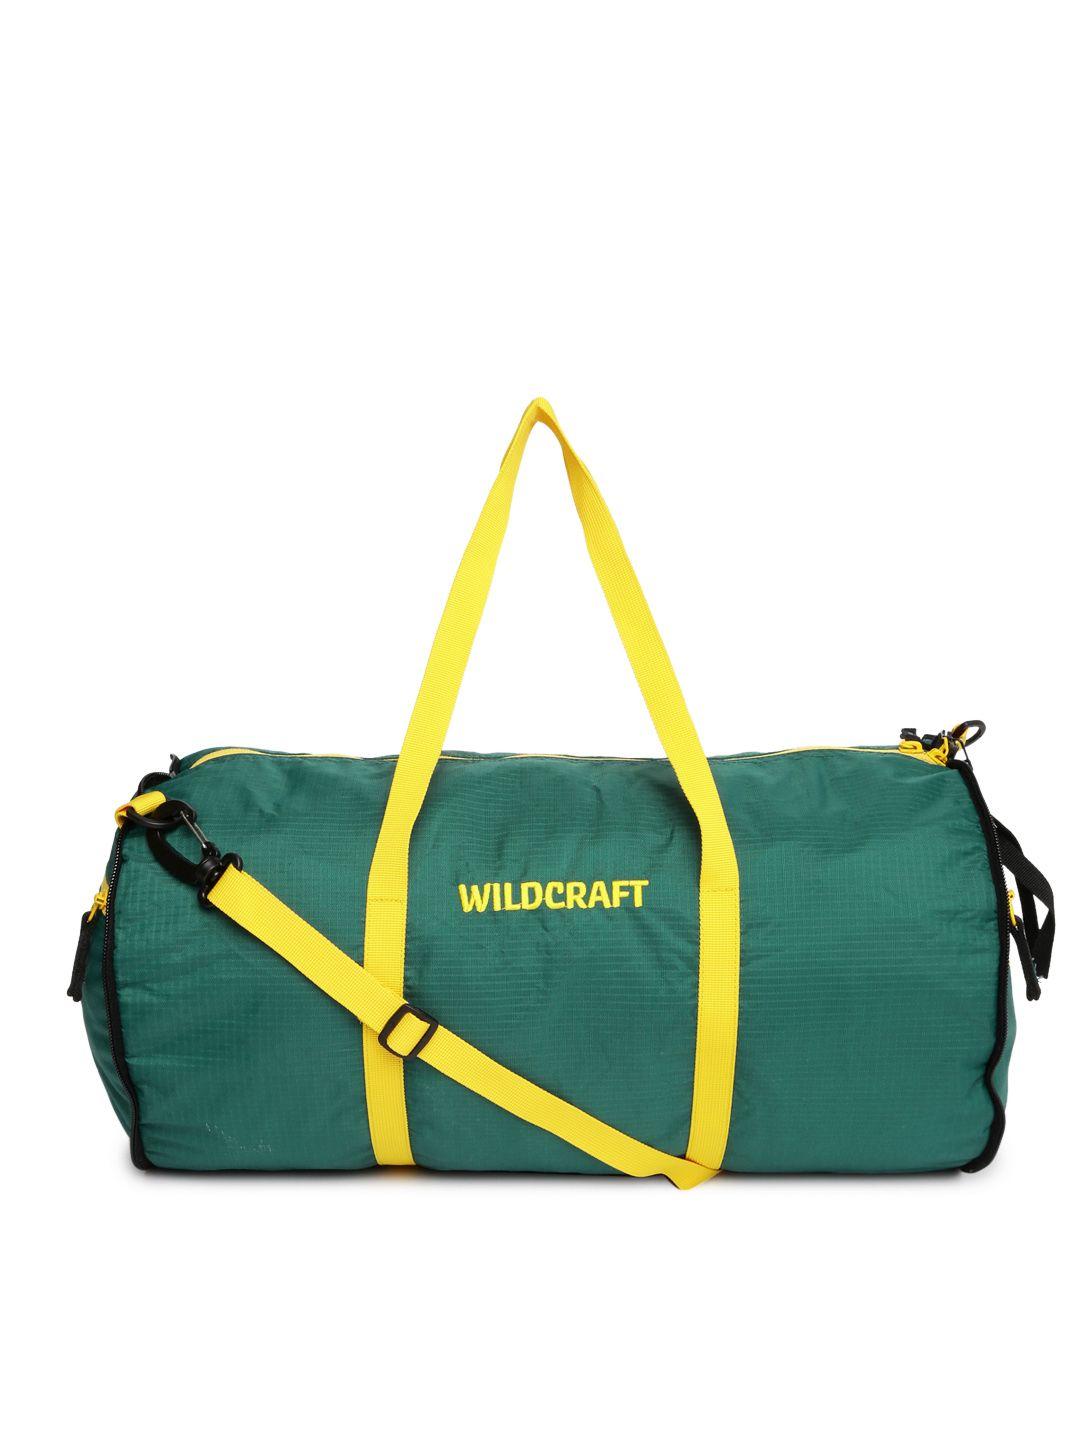 wildcraft unisex teal green frisbee foldable duffel bag